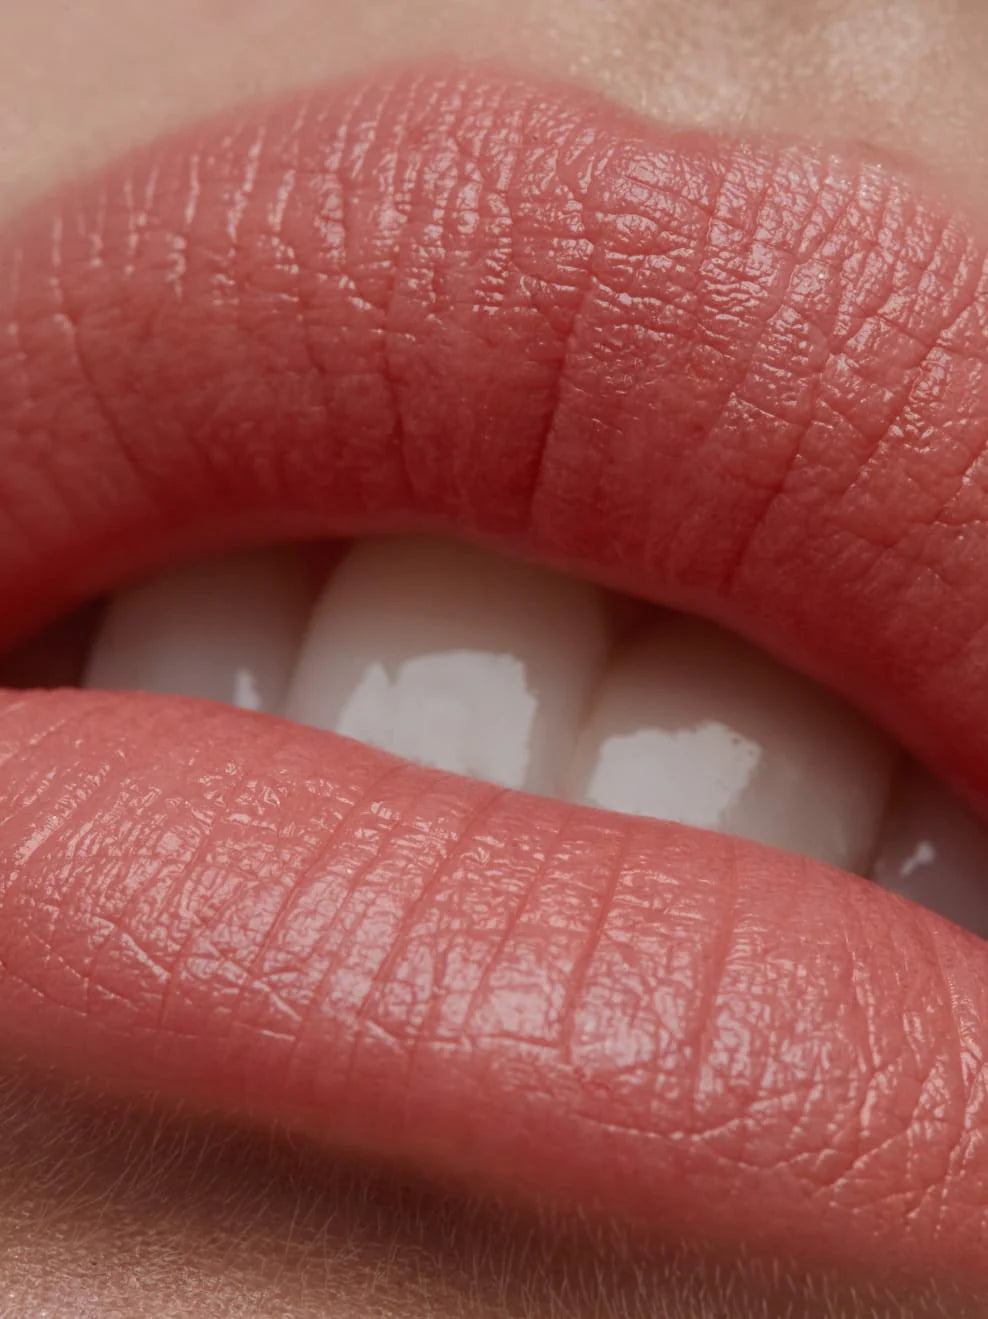 TAGAROT Lipstick, 3.5g